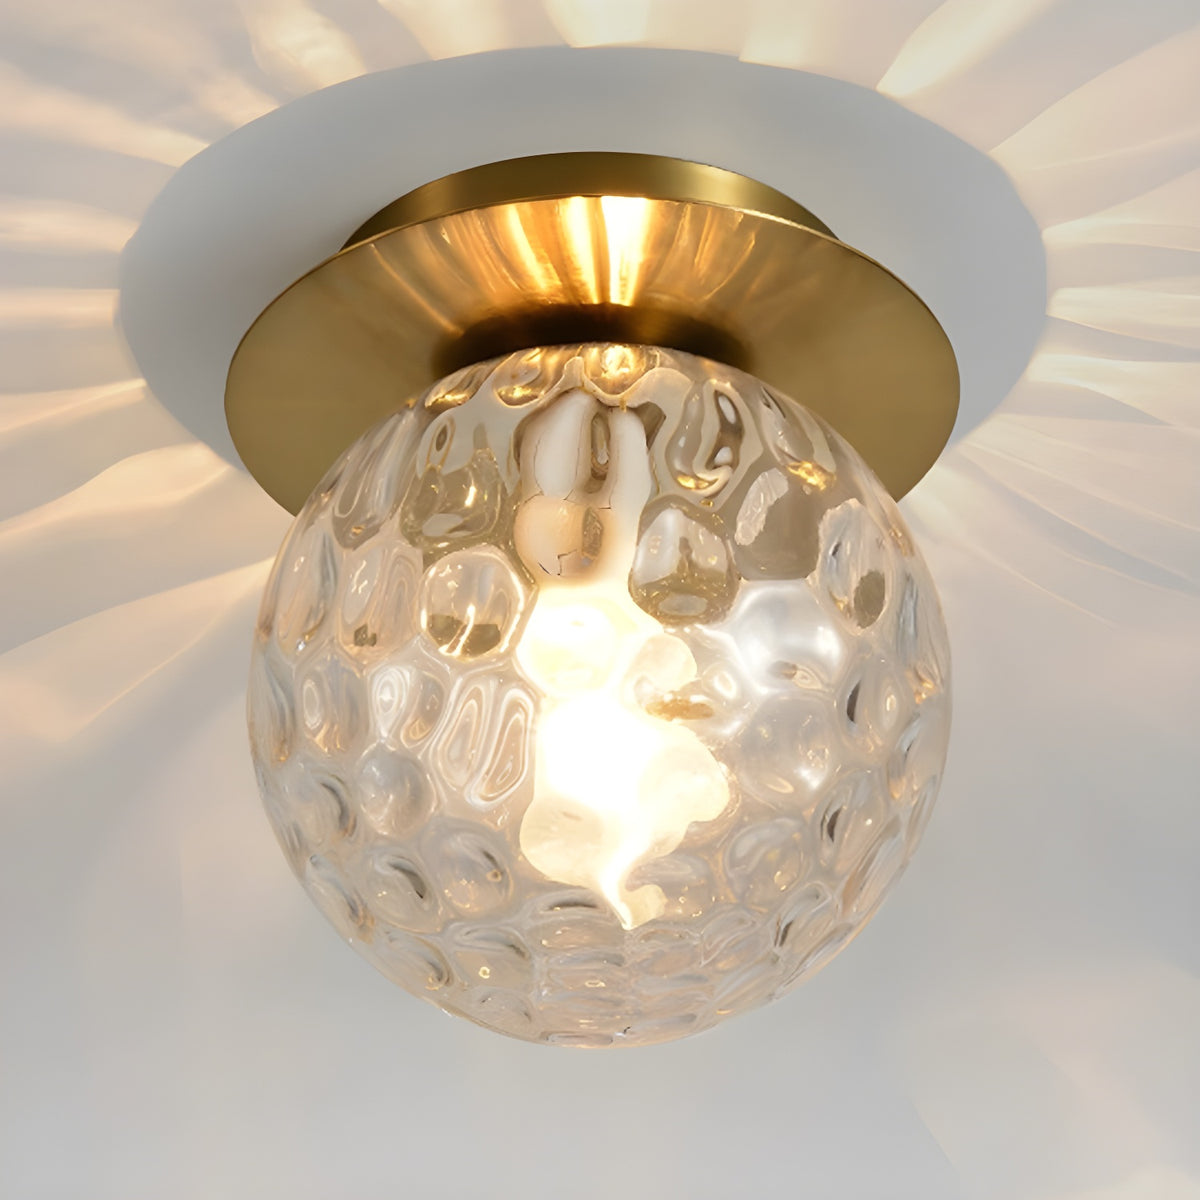 Small Glass Ceiling Light Fixture for Corridor -Homdiy